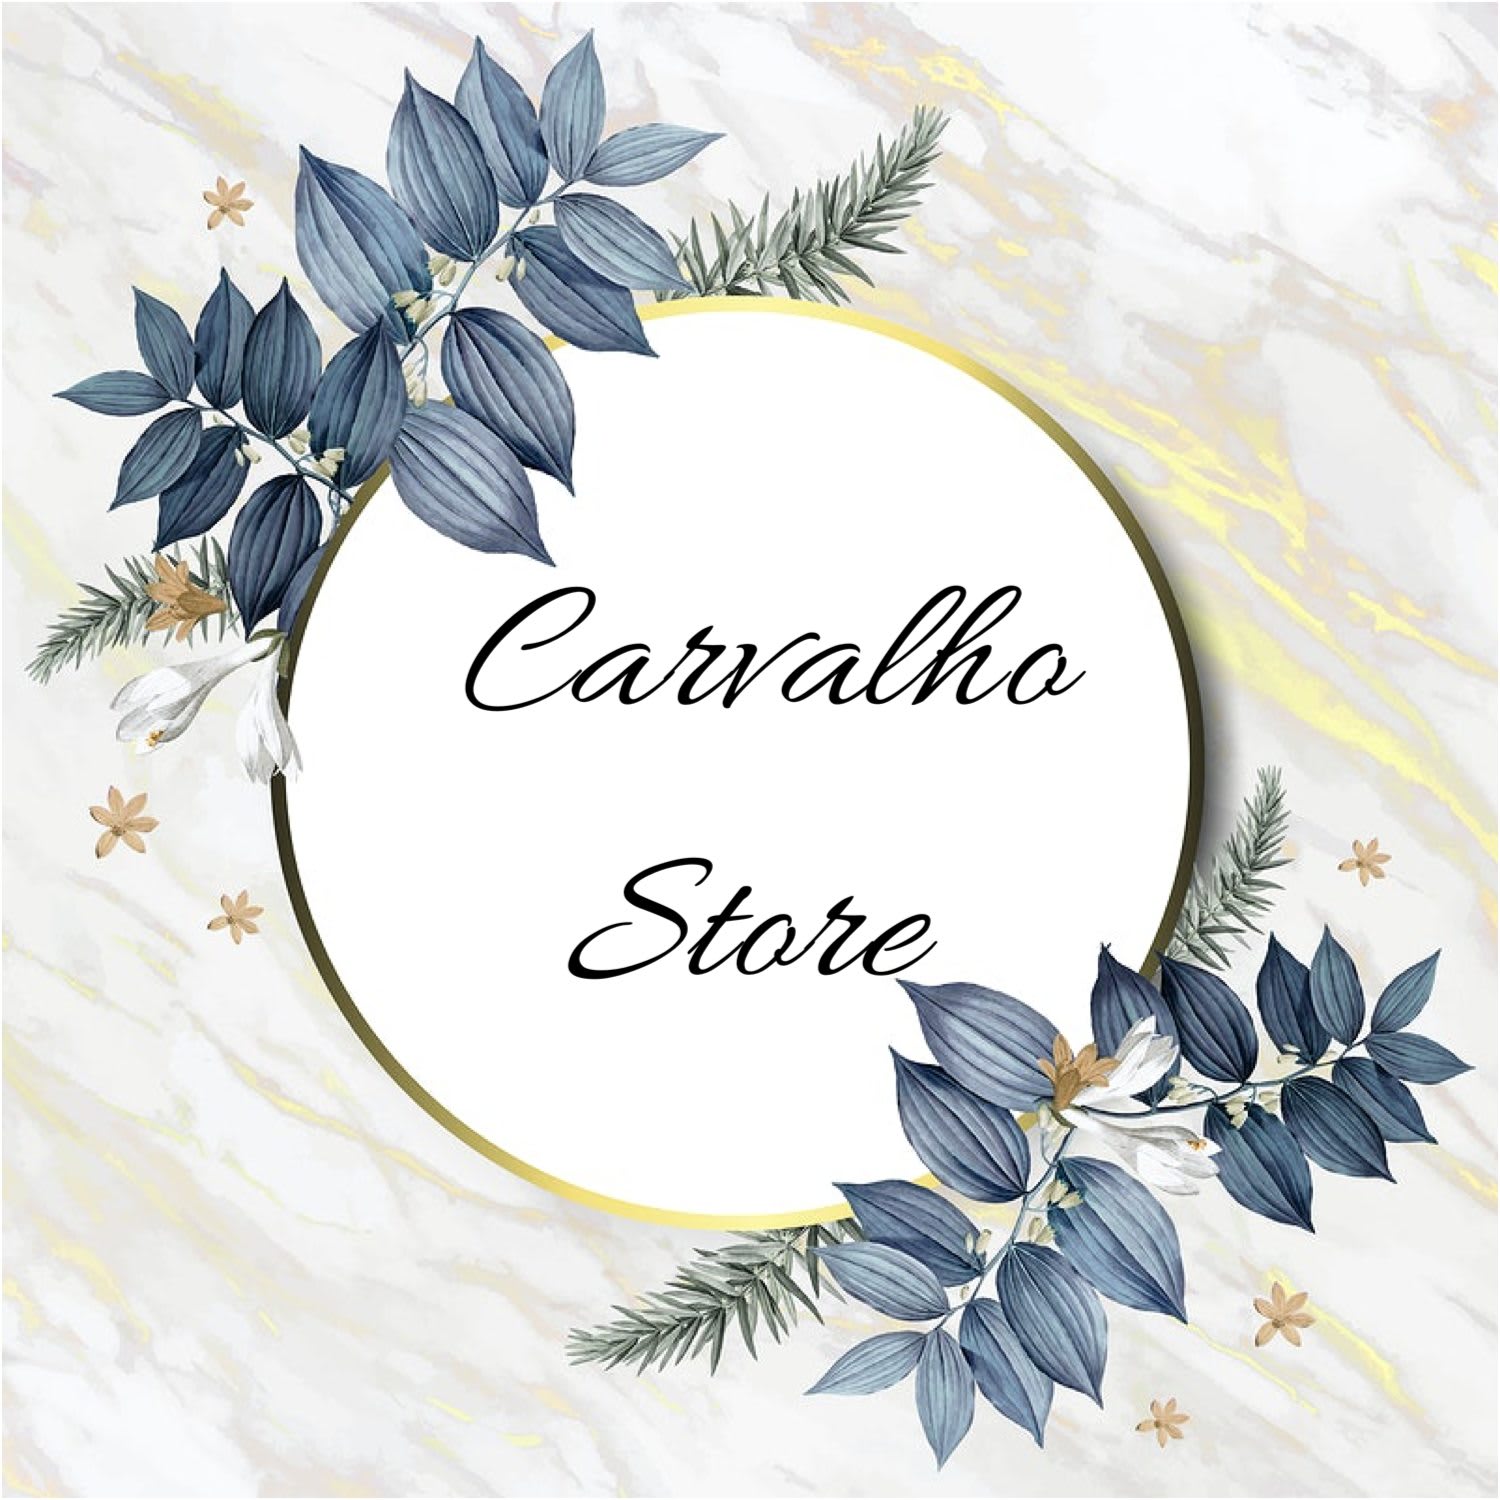 Carvalho Store